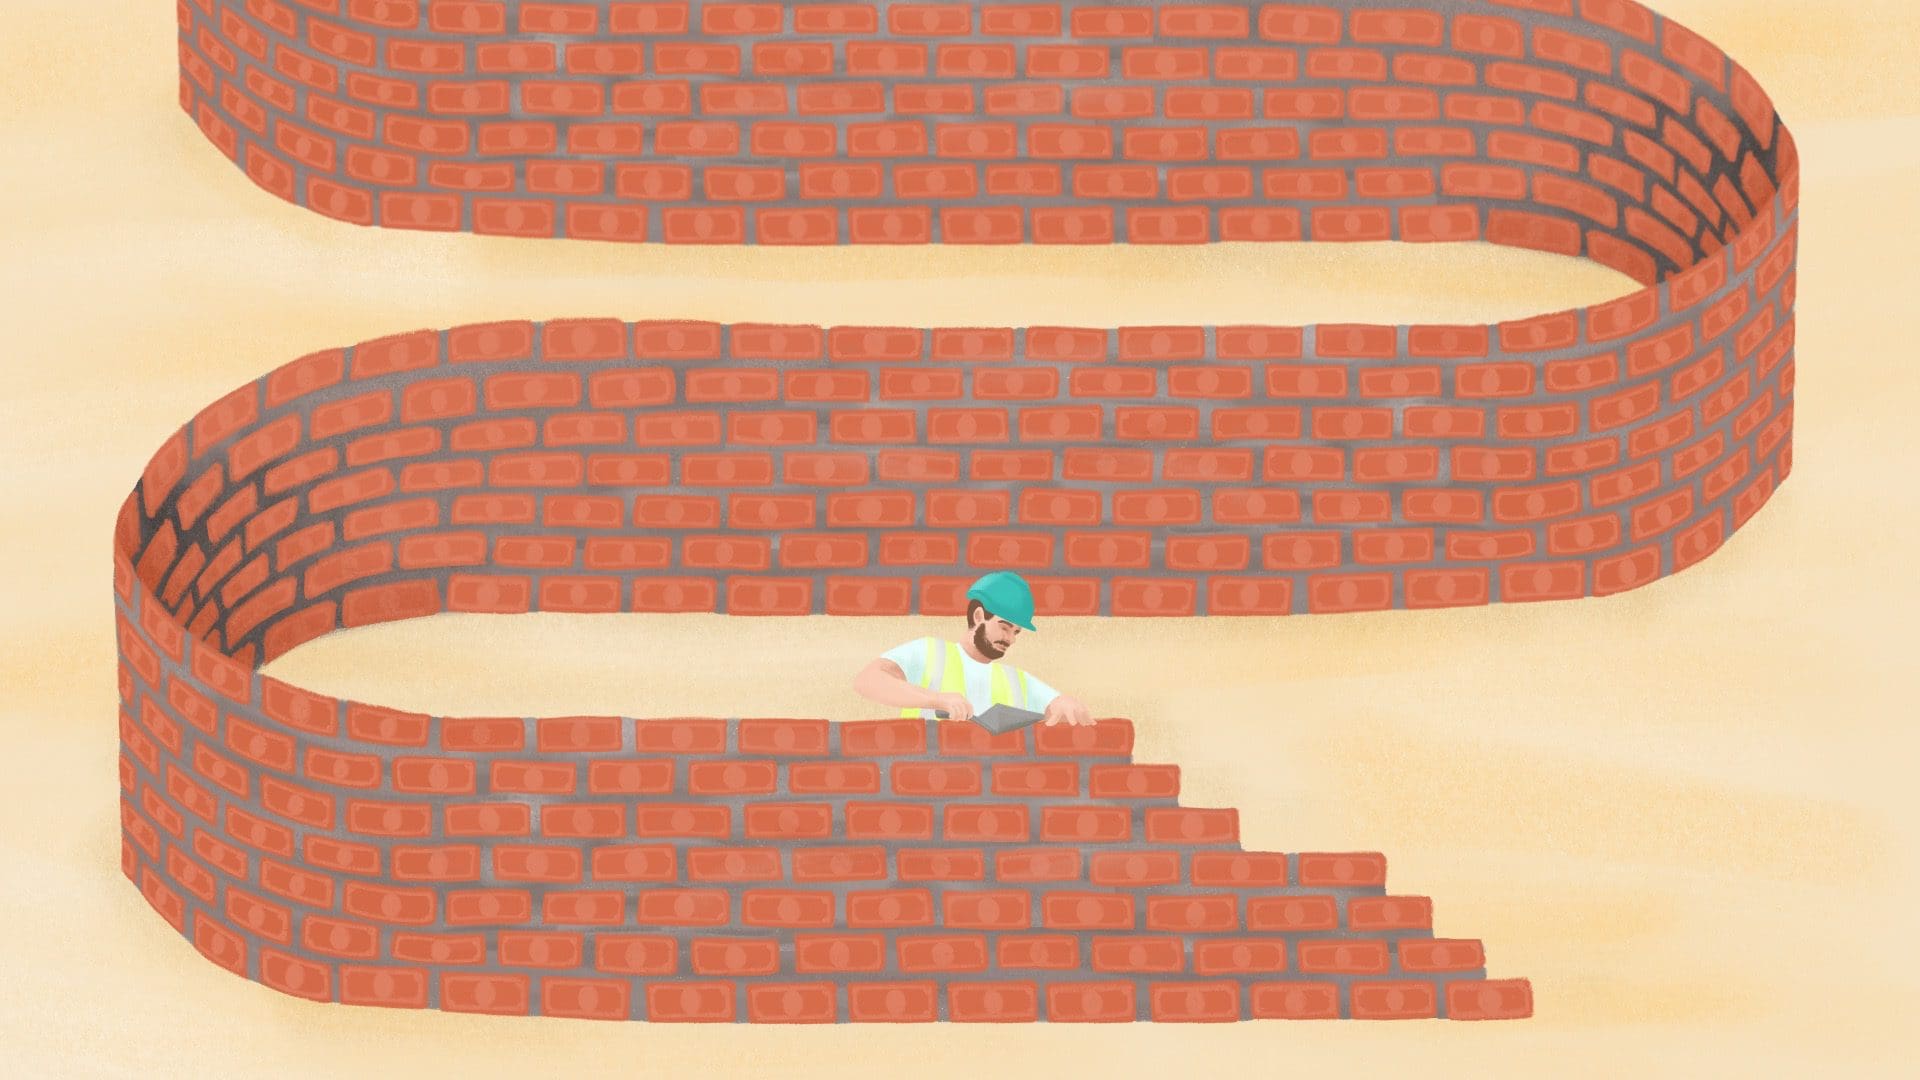 graphic of a man laying a brick wall